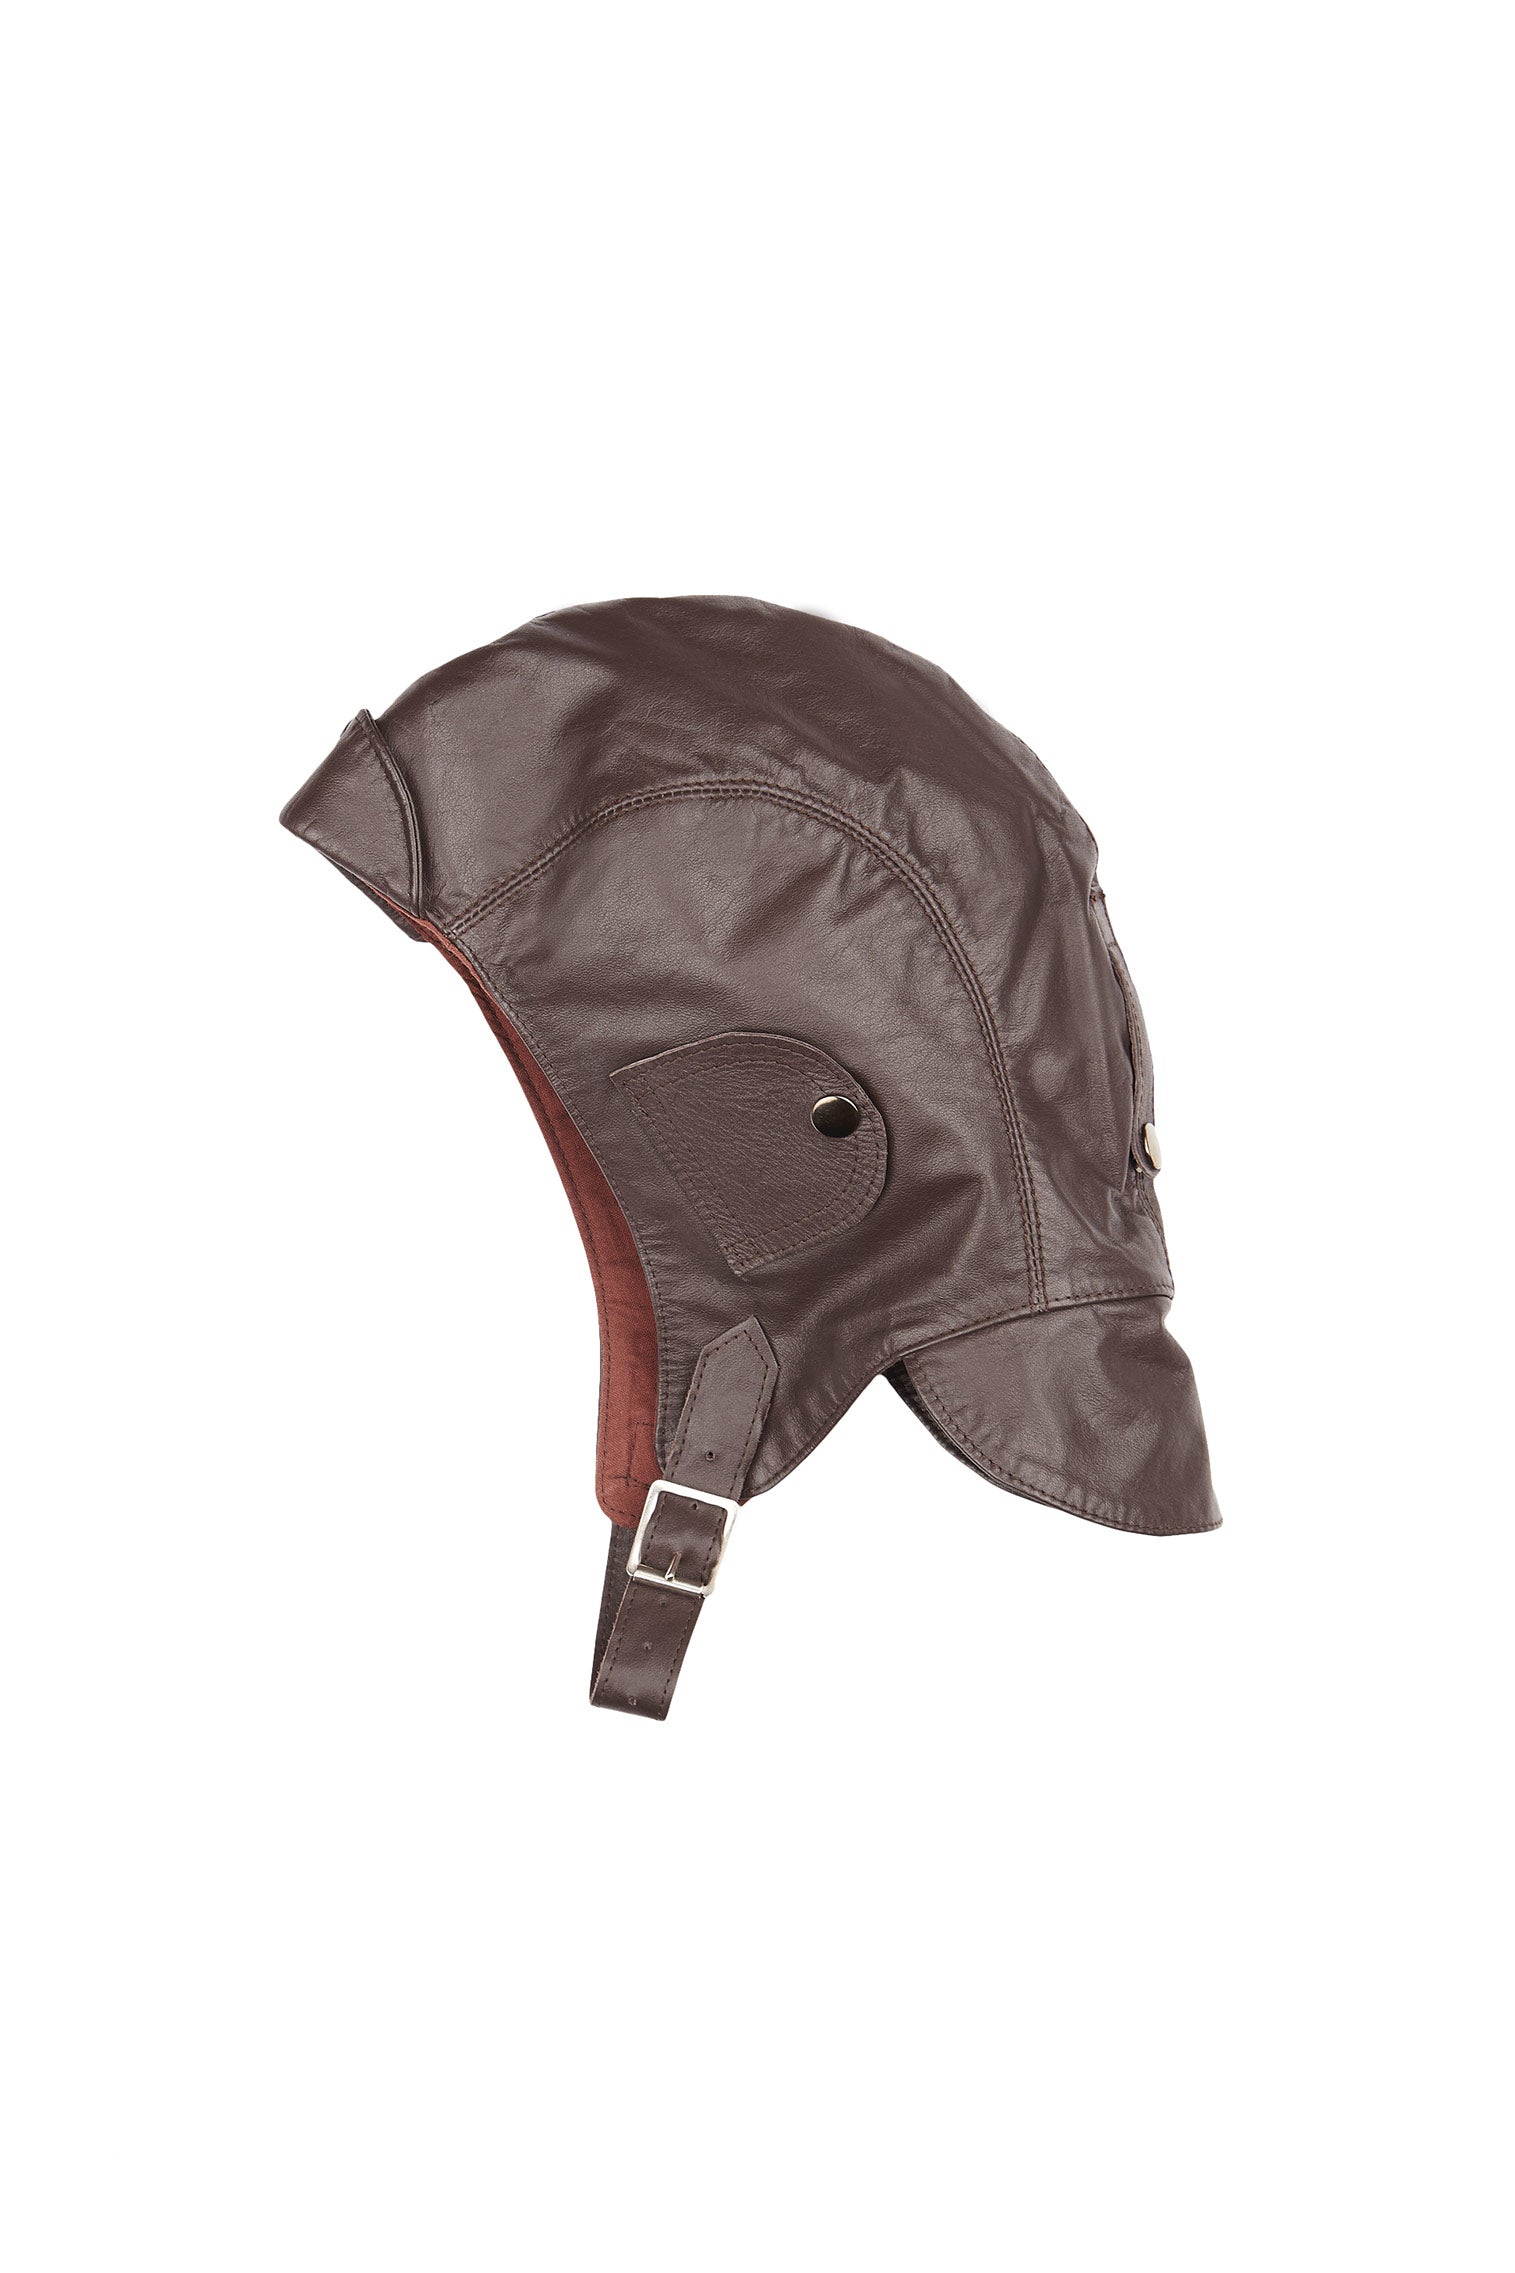 Aviator Helmet - Accessories - Lock & Co. Hatters London UK